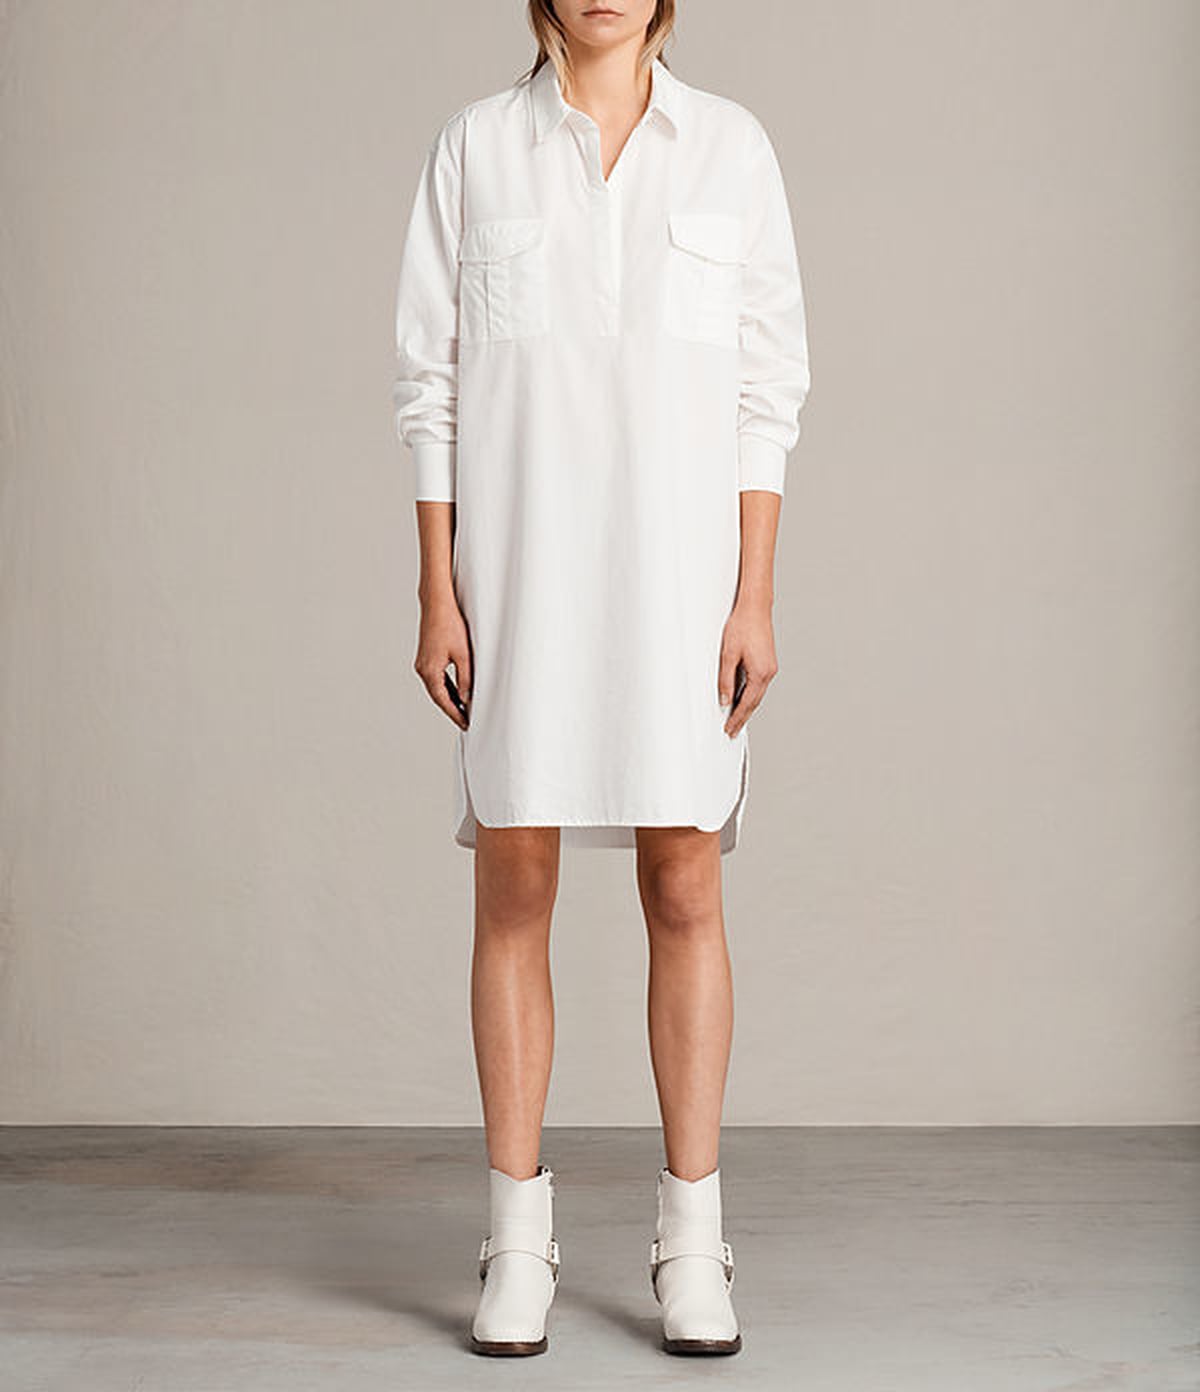 Emily Ratajkowski Wearing White Jacquemus Dress | POPSUGAR Fashion